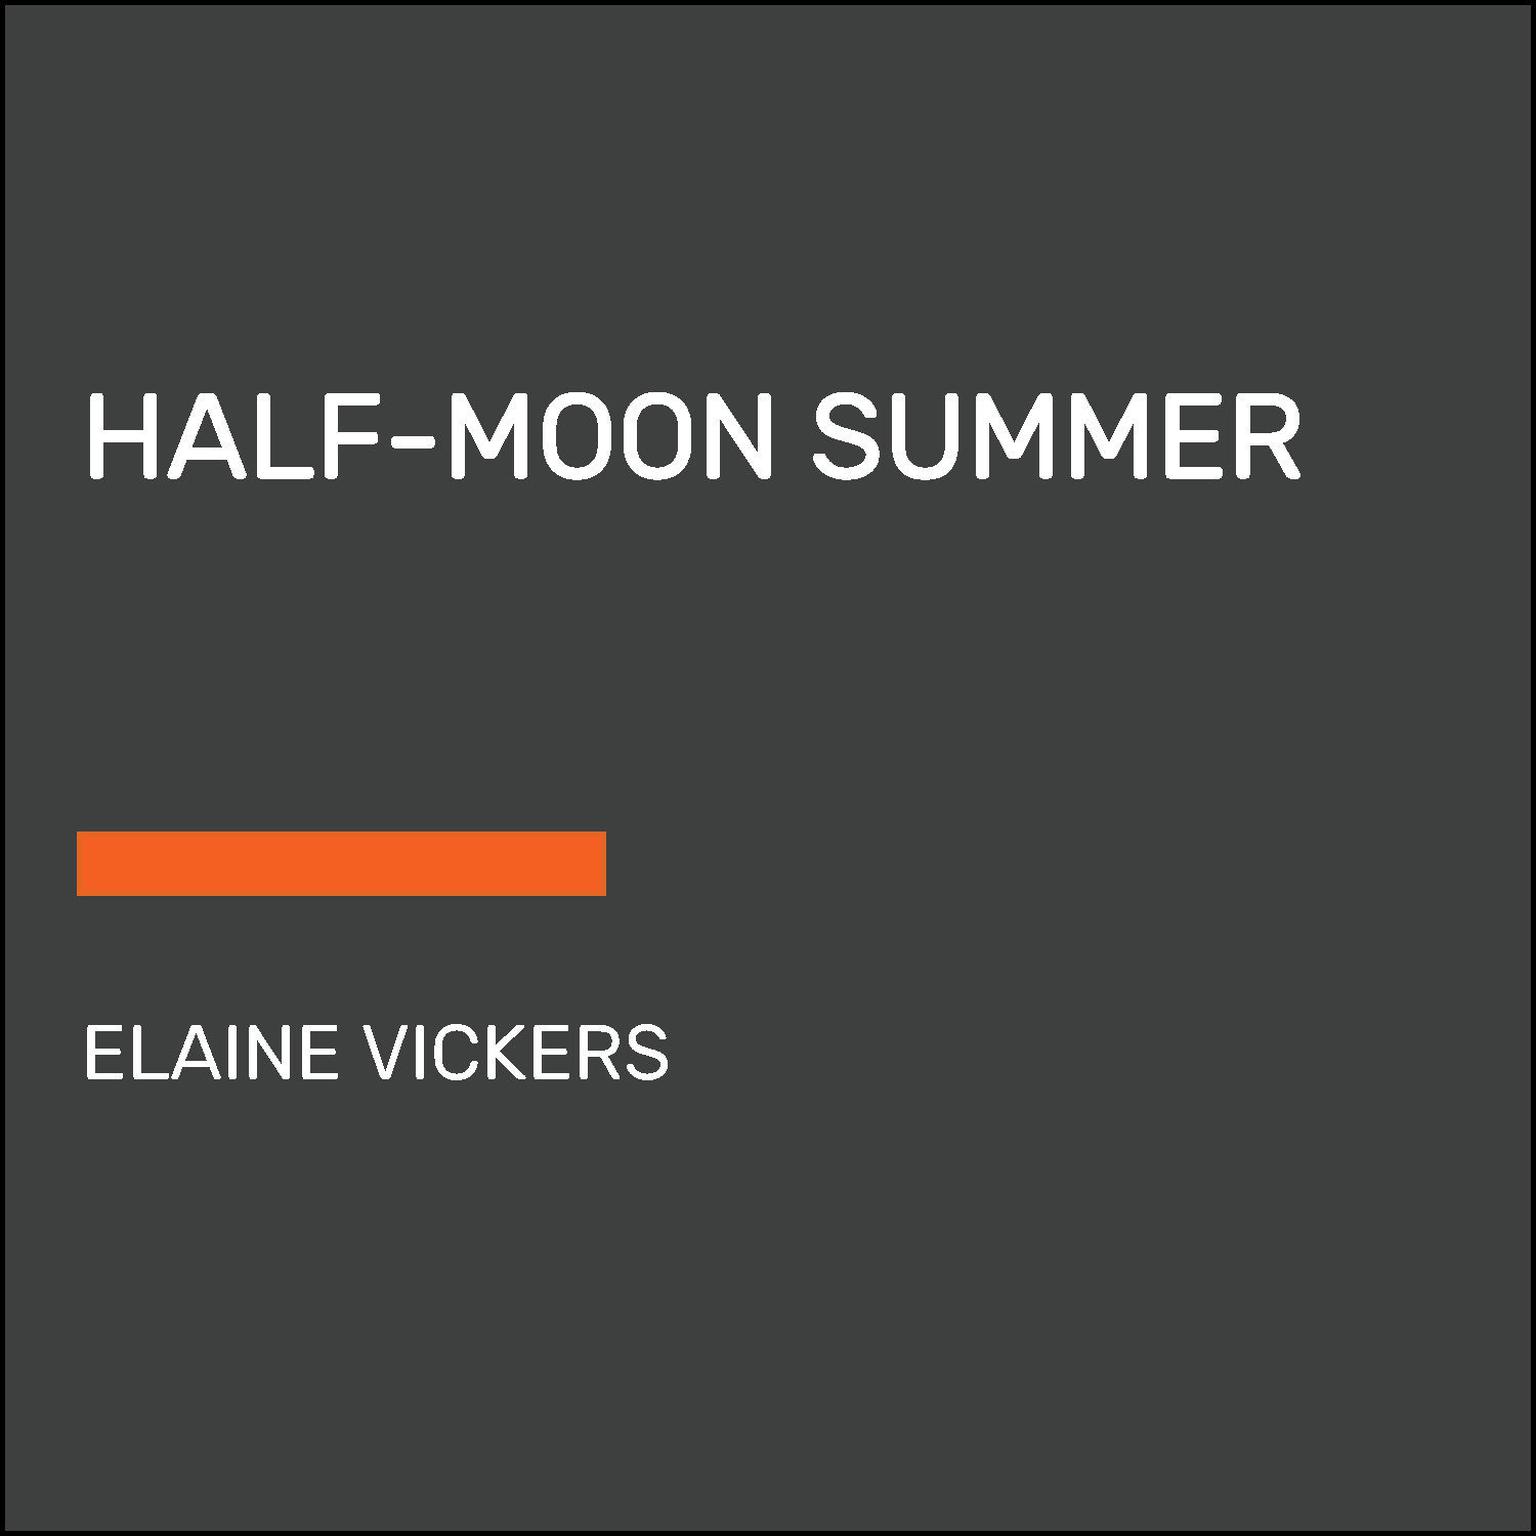 Half-Moon Summer Audiobook, by Elaine Vickers